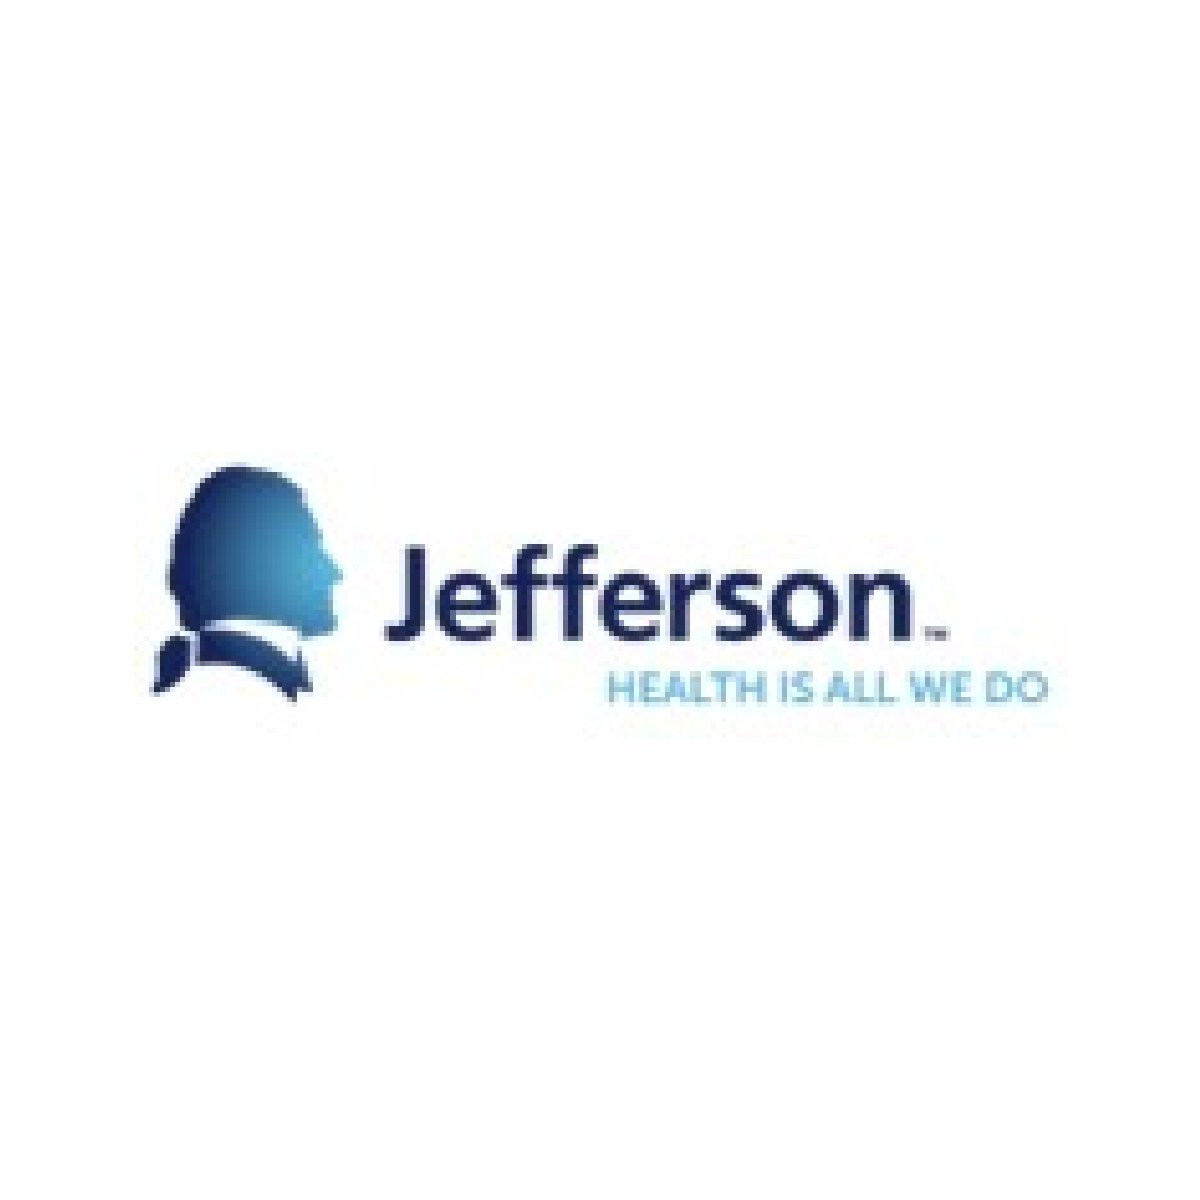 Jefferson logo